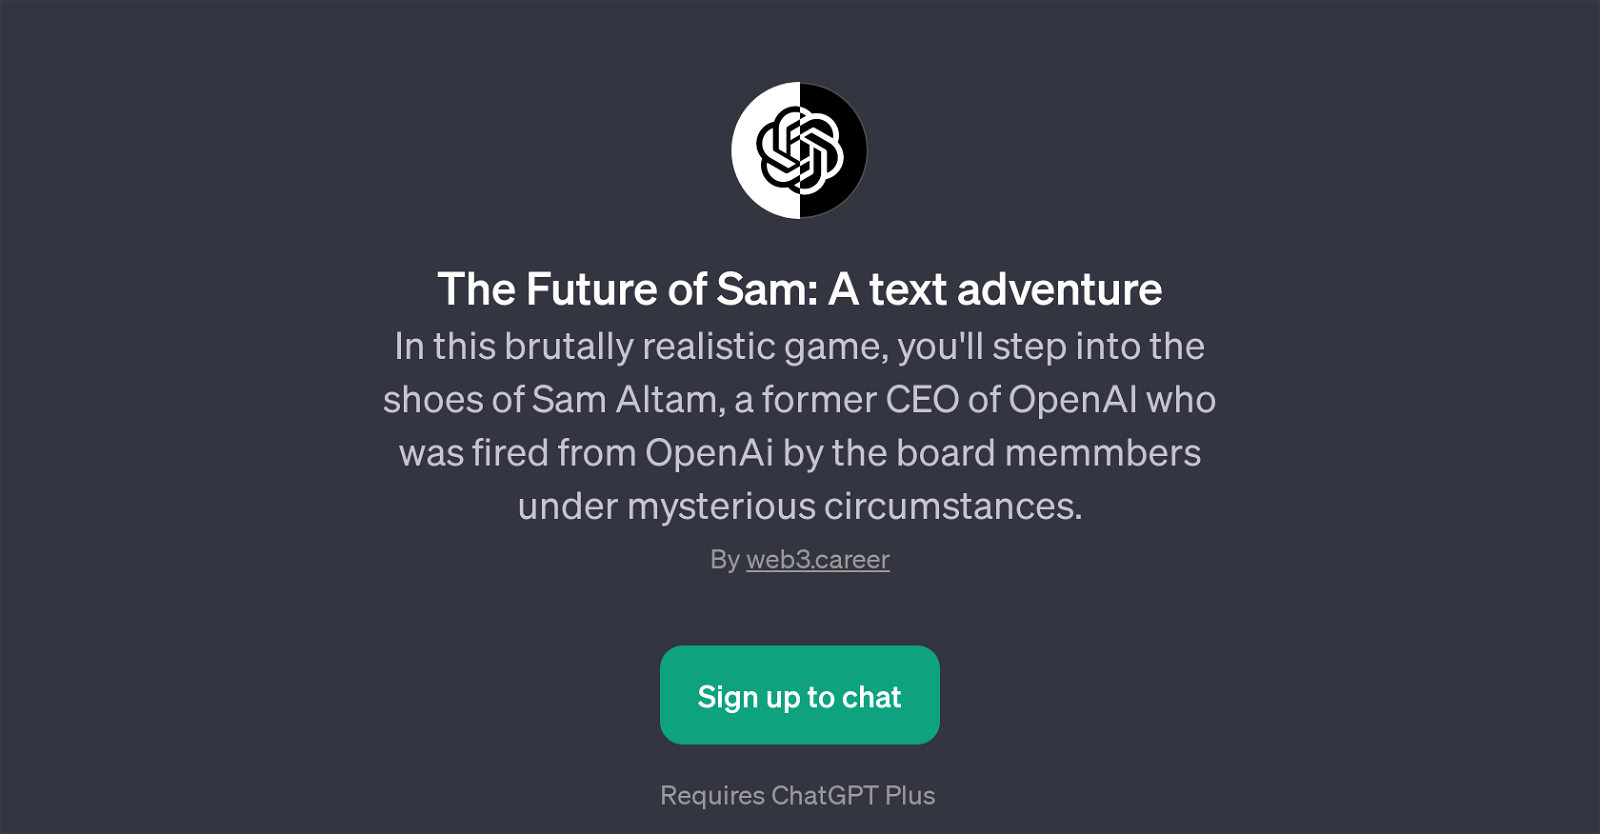 The Future of Sam: A text adventure website